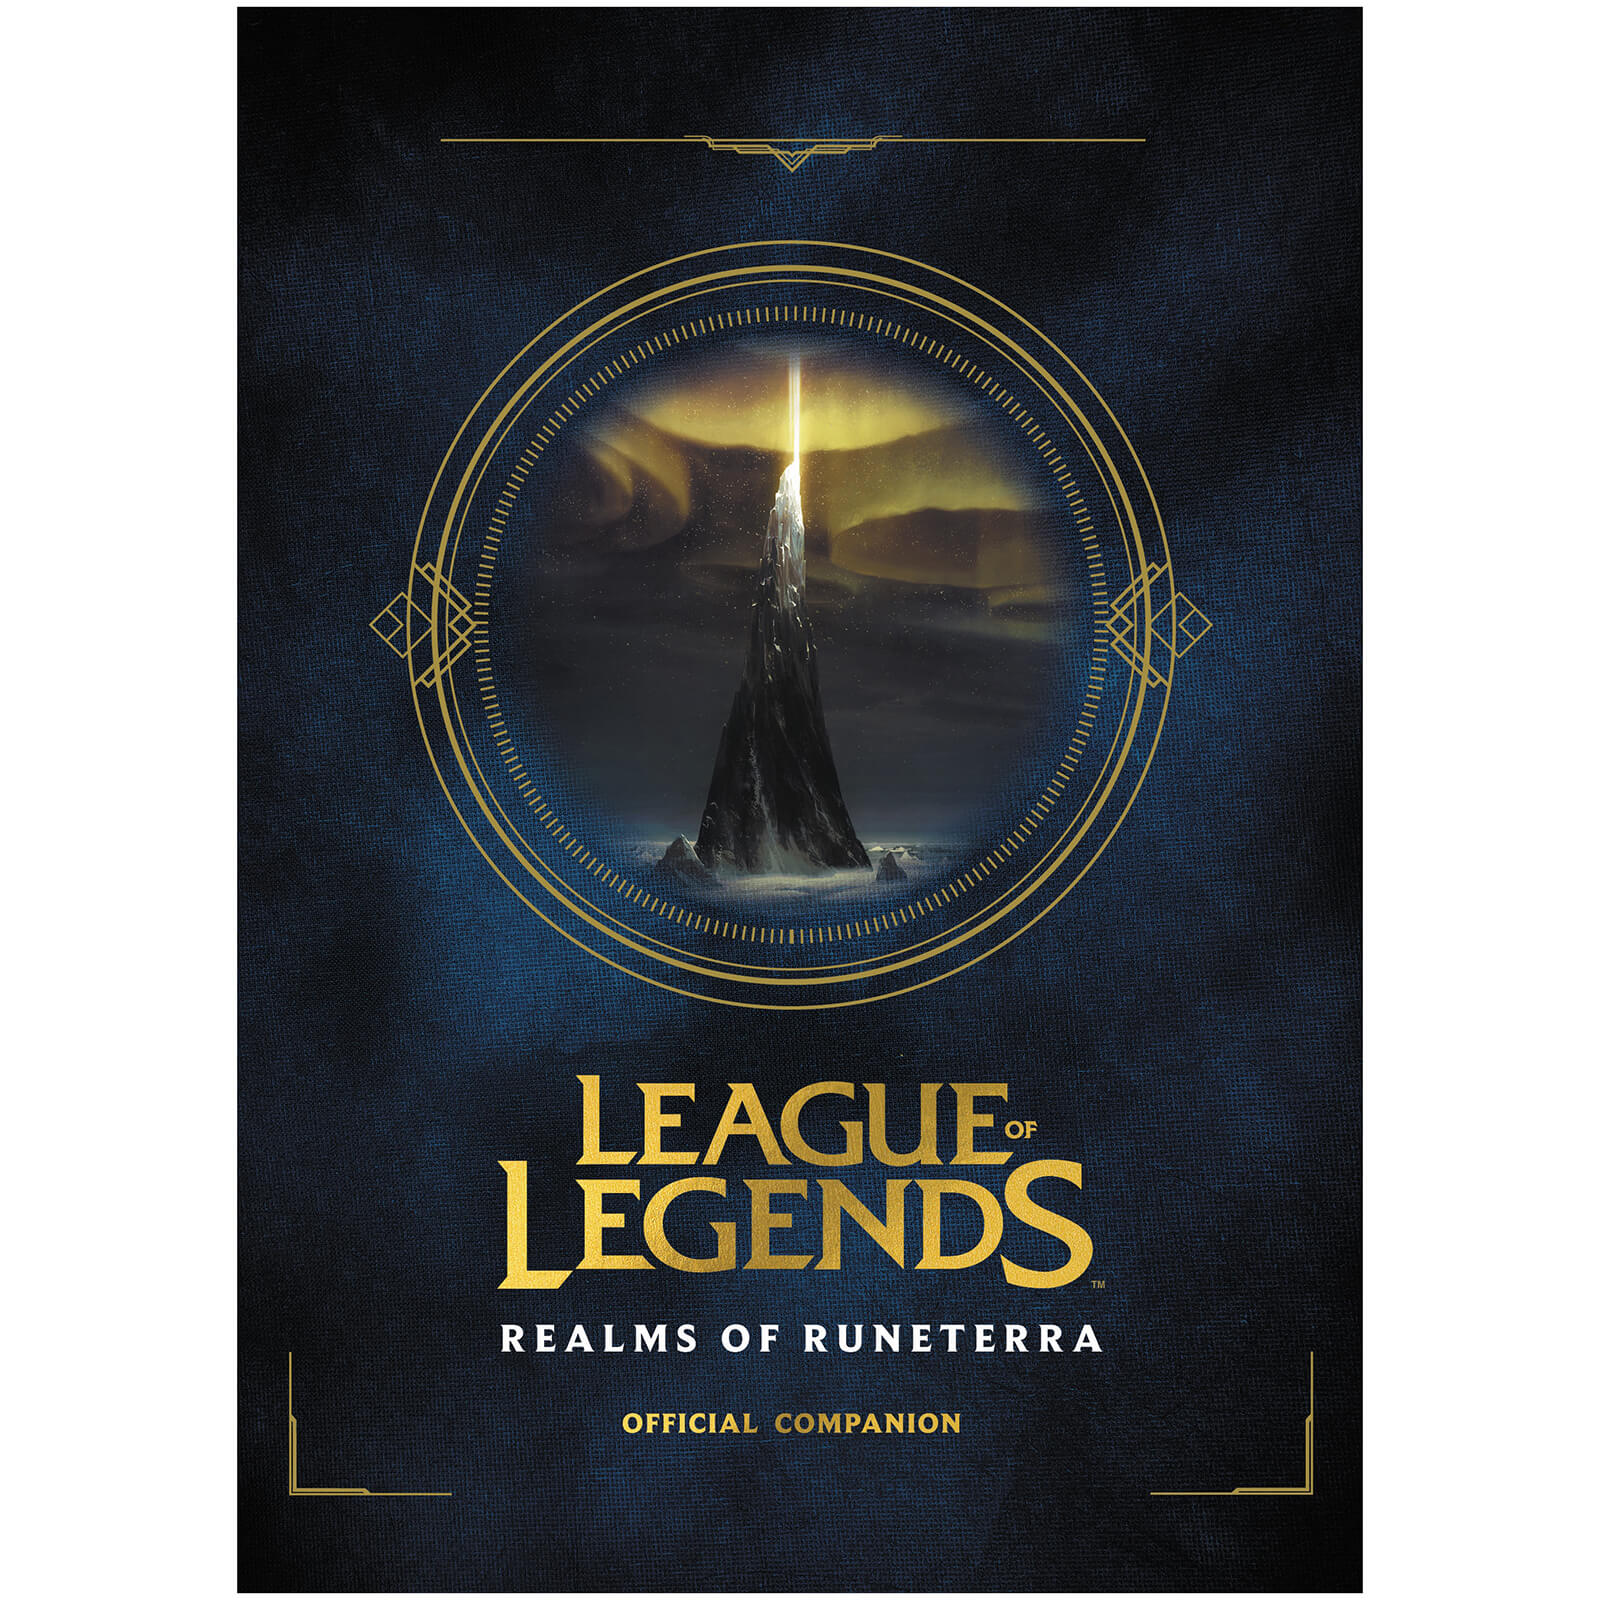 League of Legends: Realms of Runeterra (Official Companion Book)